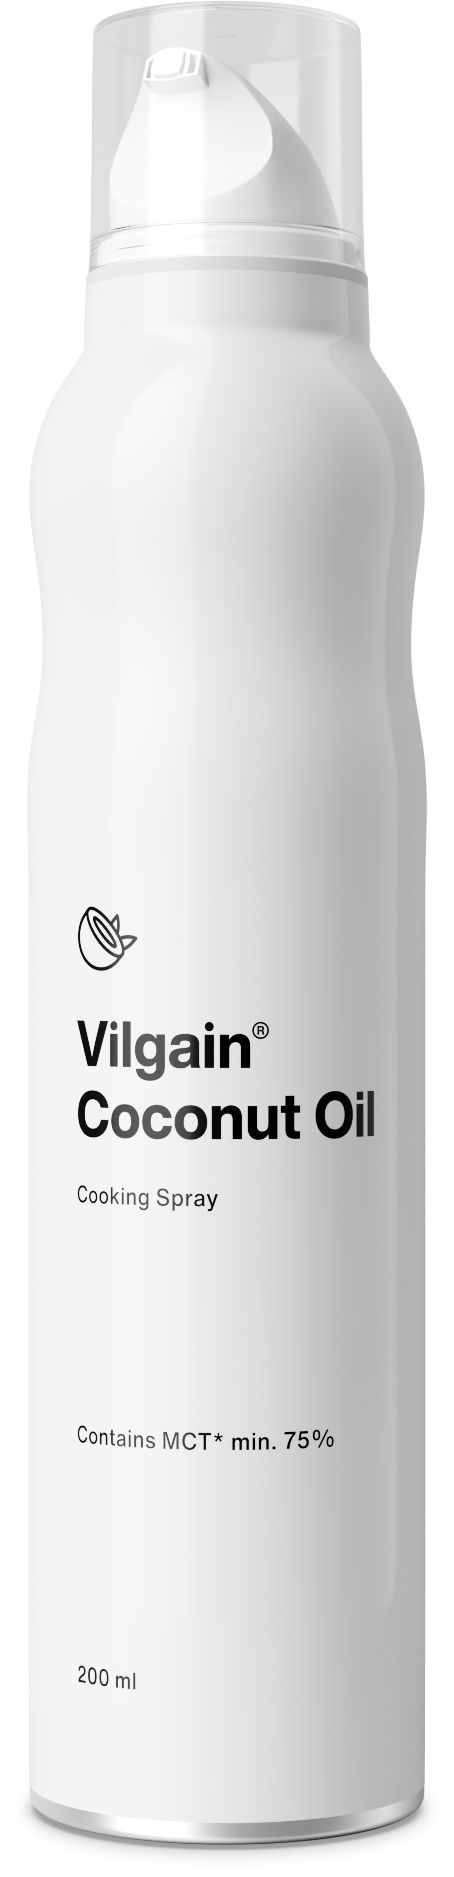 Vilgain Coconut Oil Cooking Spray